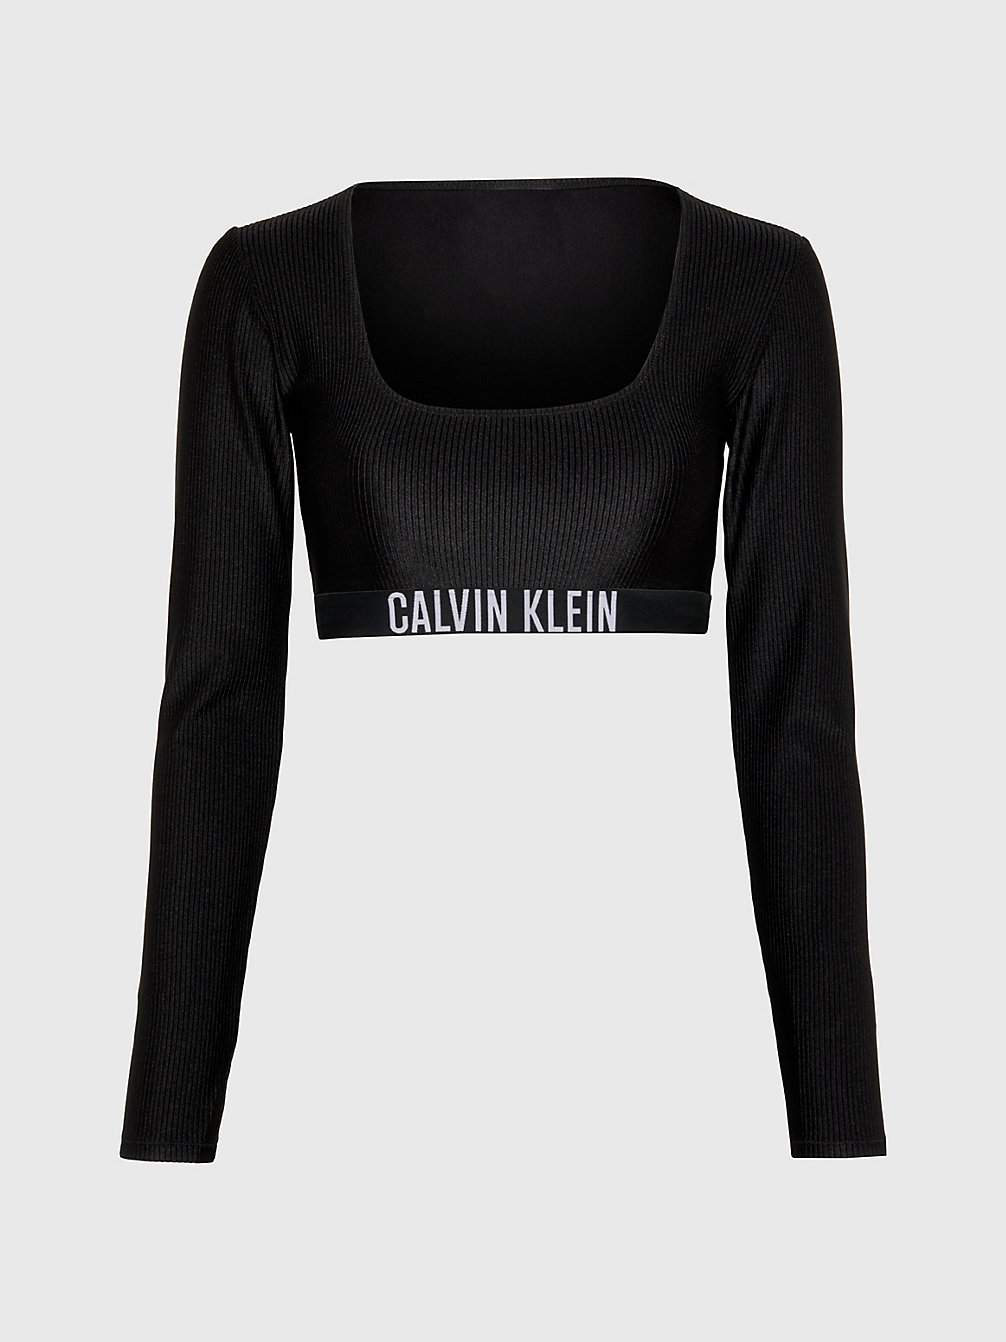 PVH BLACK Haut De Bikini Anti-Uv undefined femmes Calvin Klein